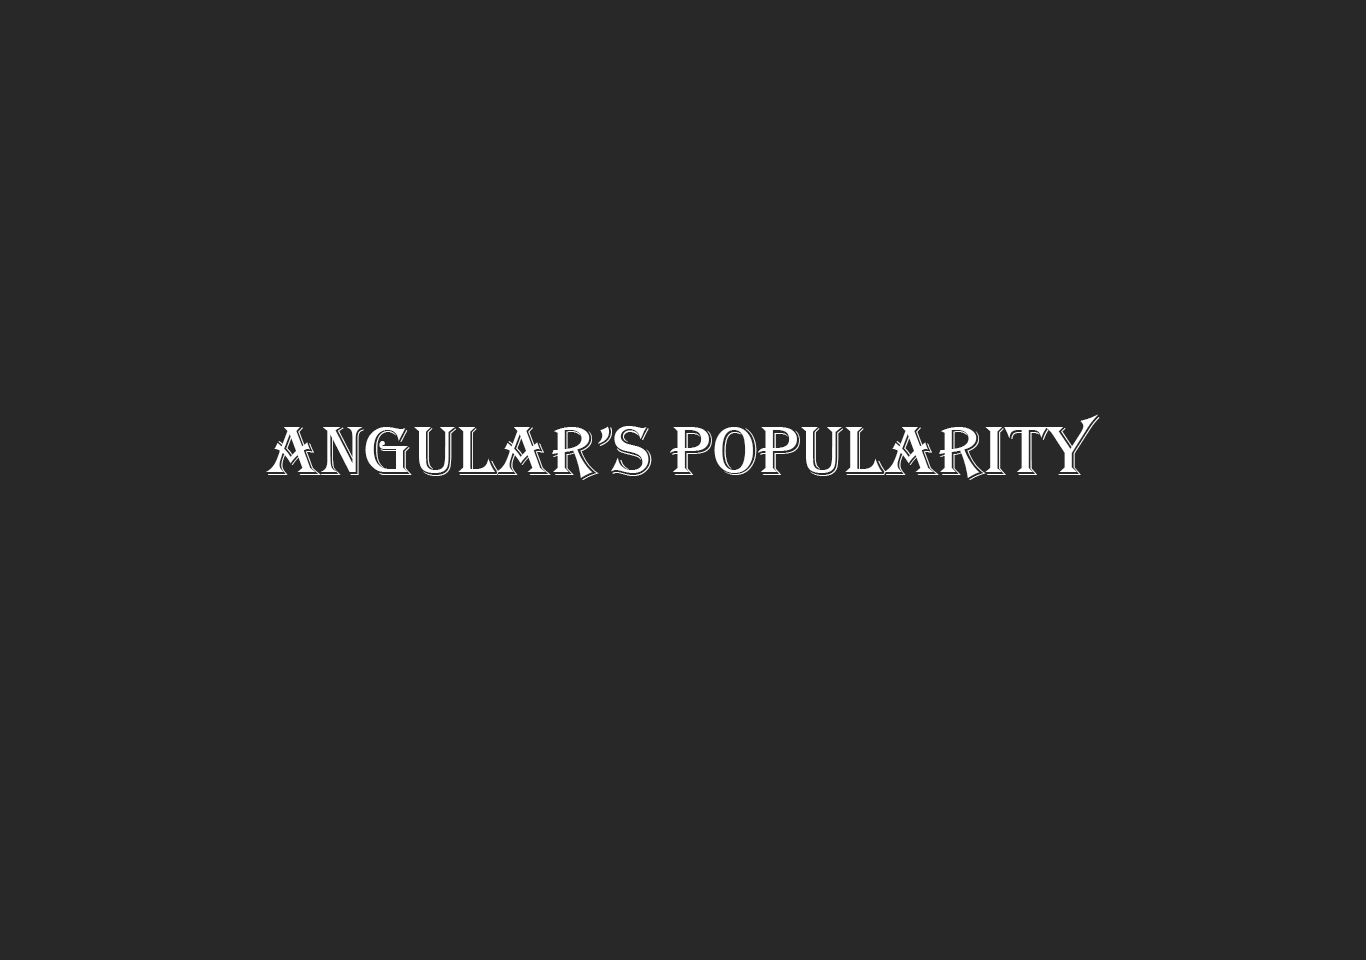 Reasons for Angular’s popularity